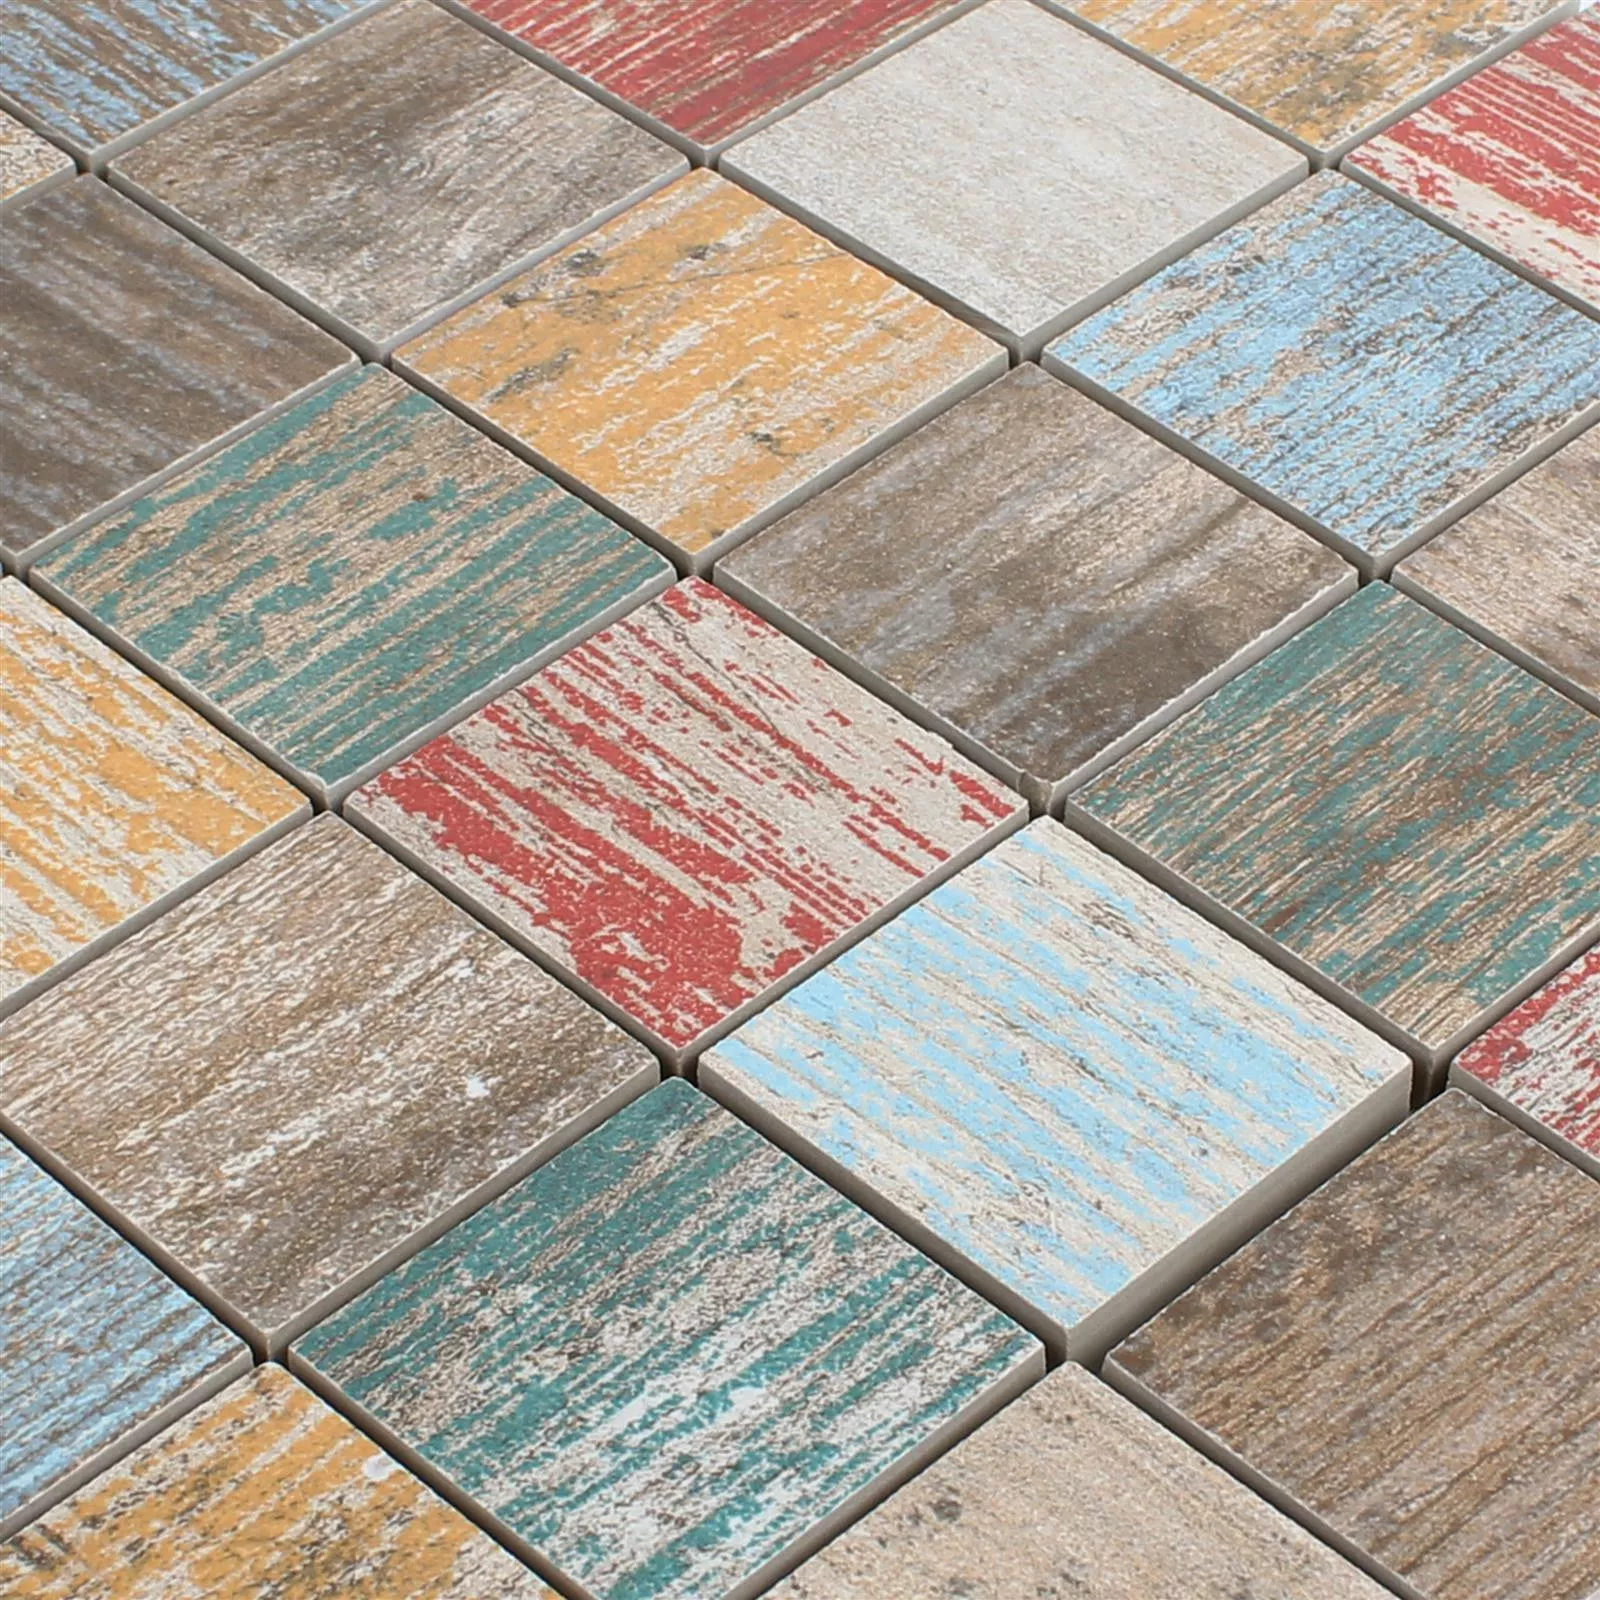 Sample Ceramic Mosaic Tiles Concerto Colored Square R10/B